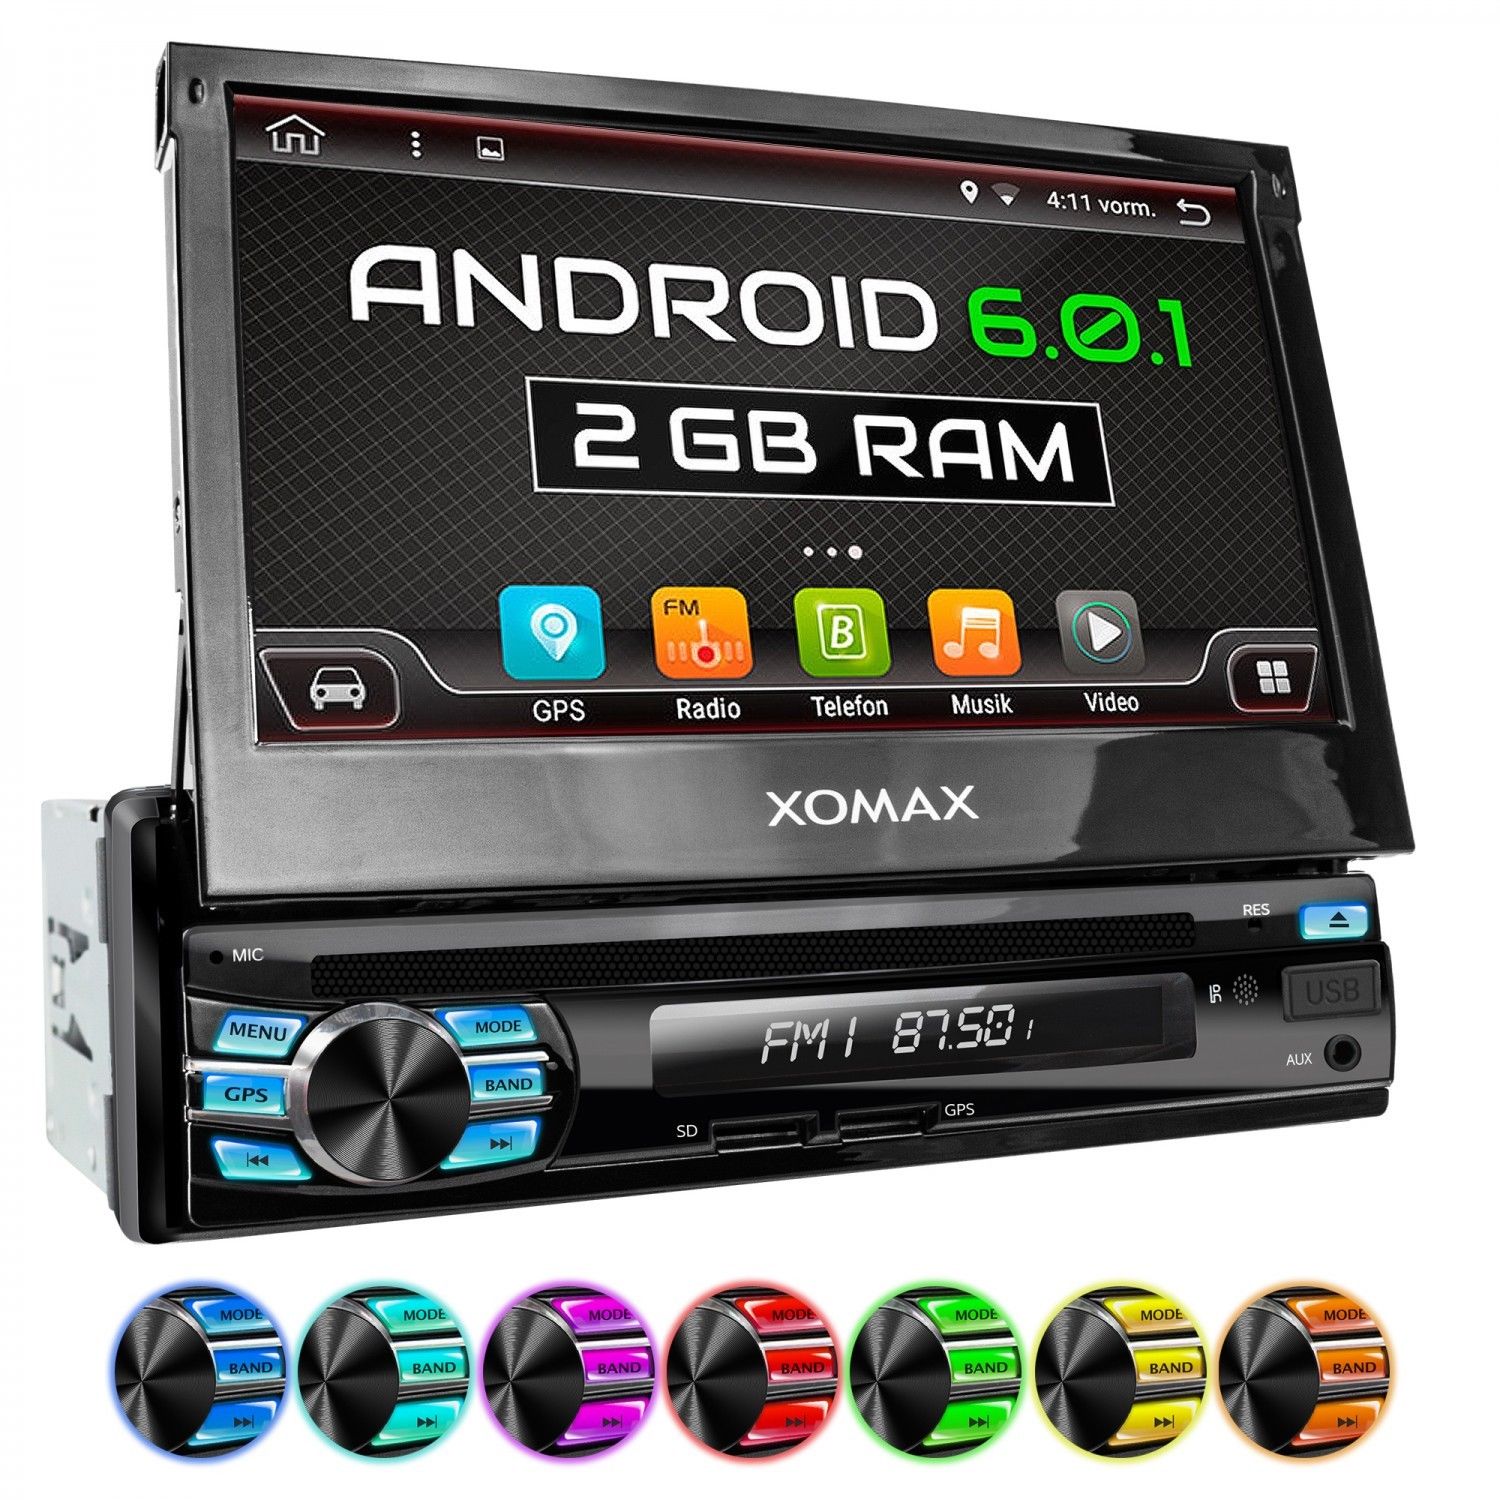 AUTORADIO MIT ANDROID 6.0.1 2GB RAM NAVI DVD BLUETOOTH WIFI 3G 1DIN DAB+ 1DIN 